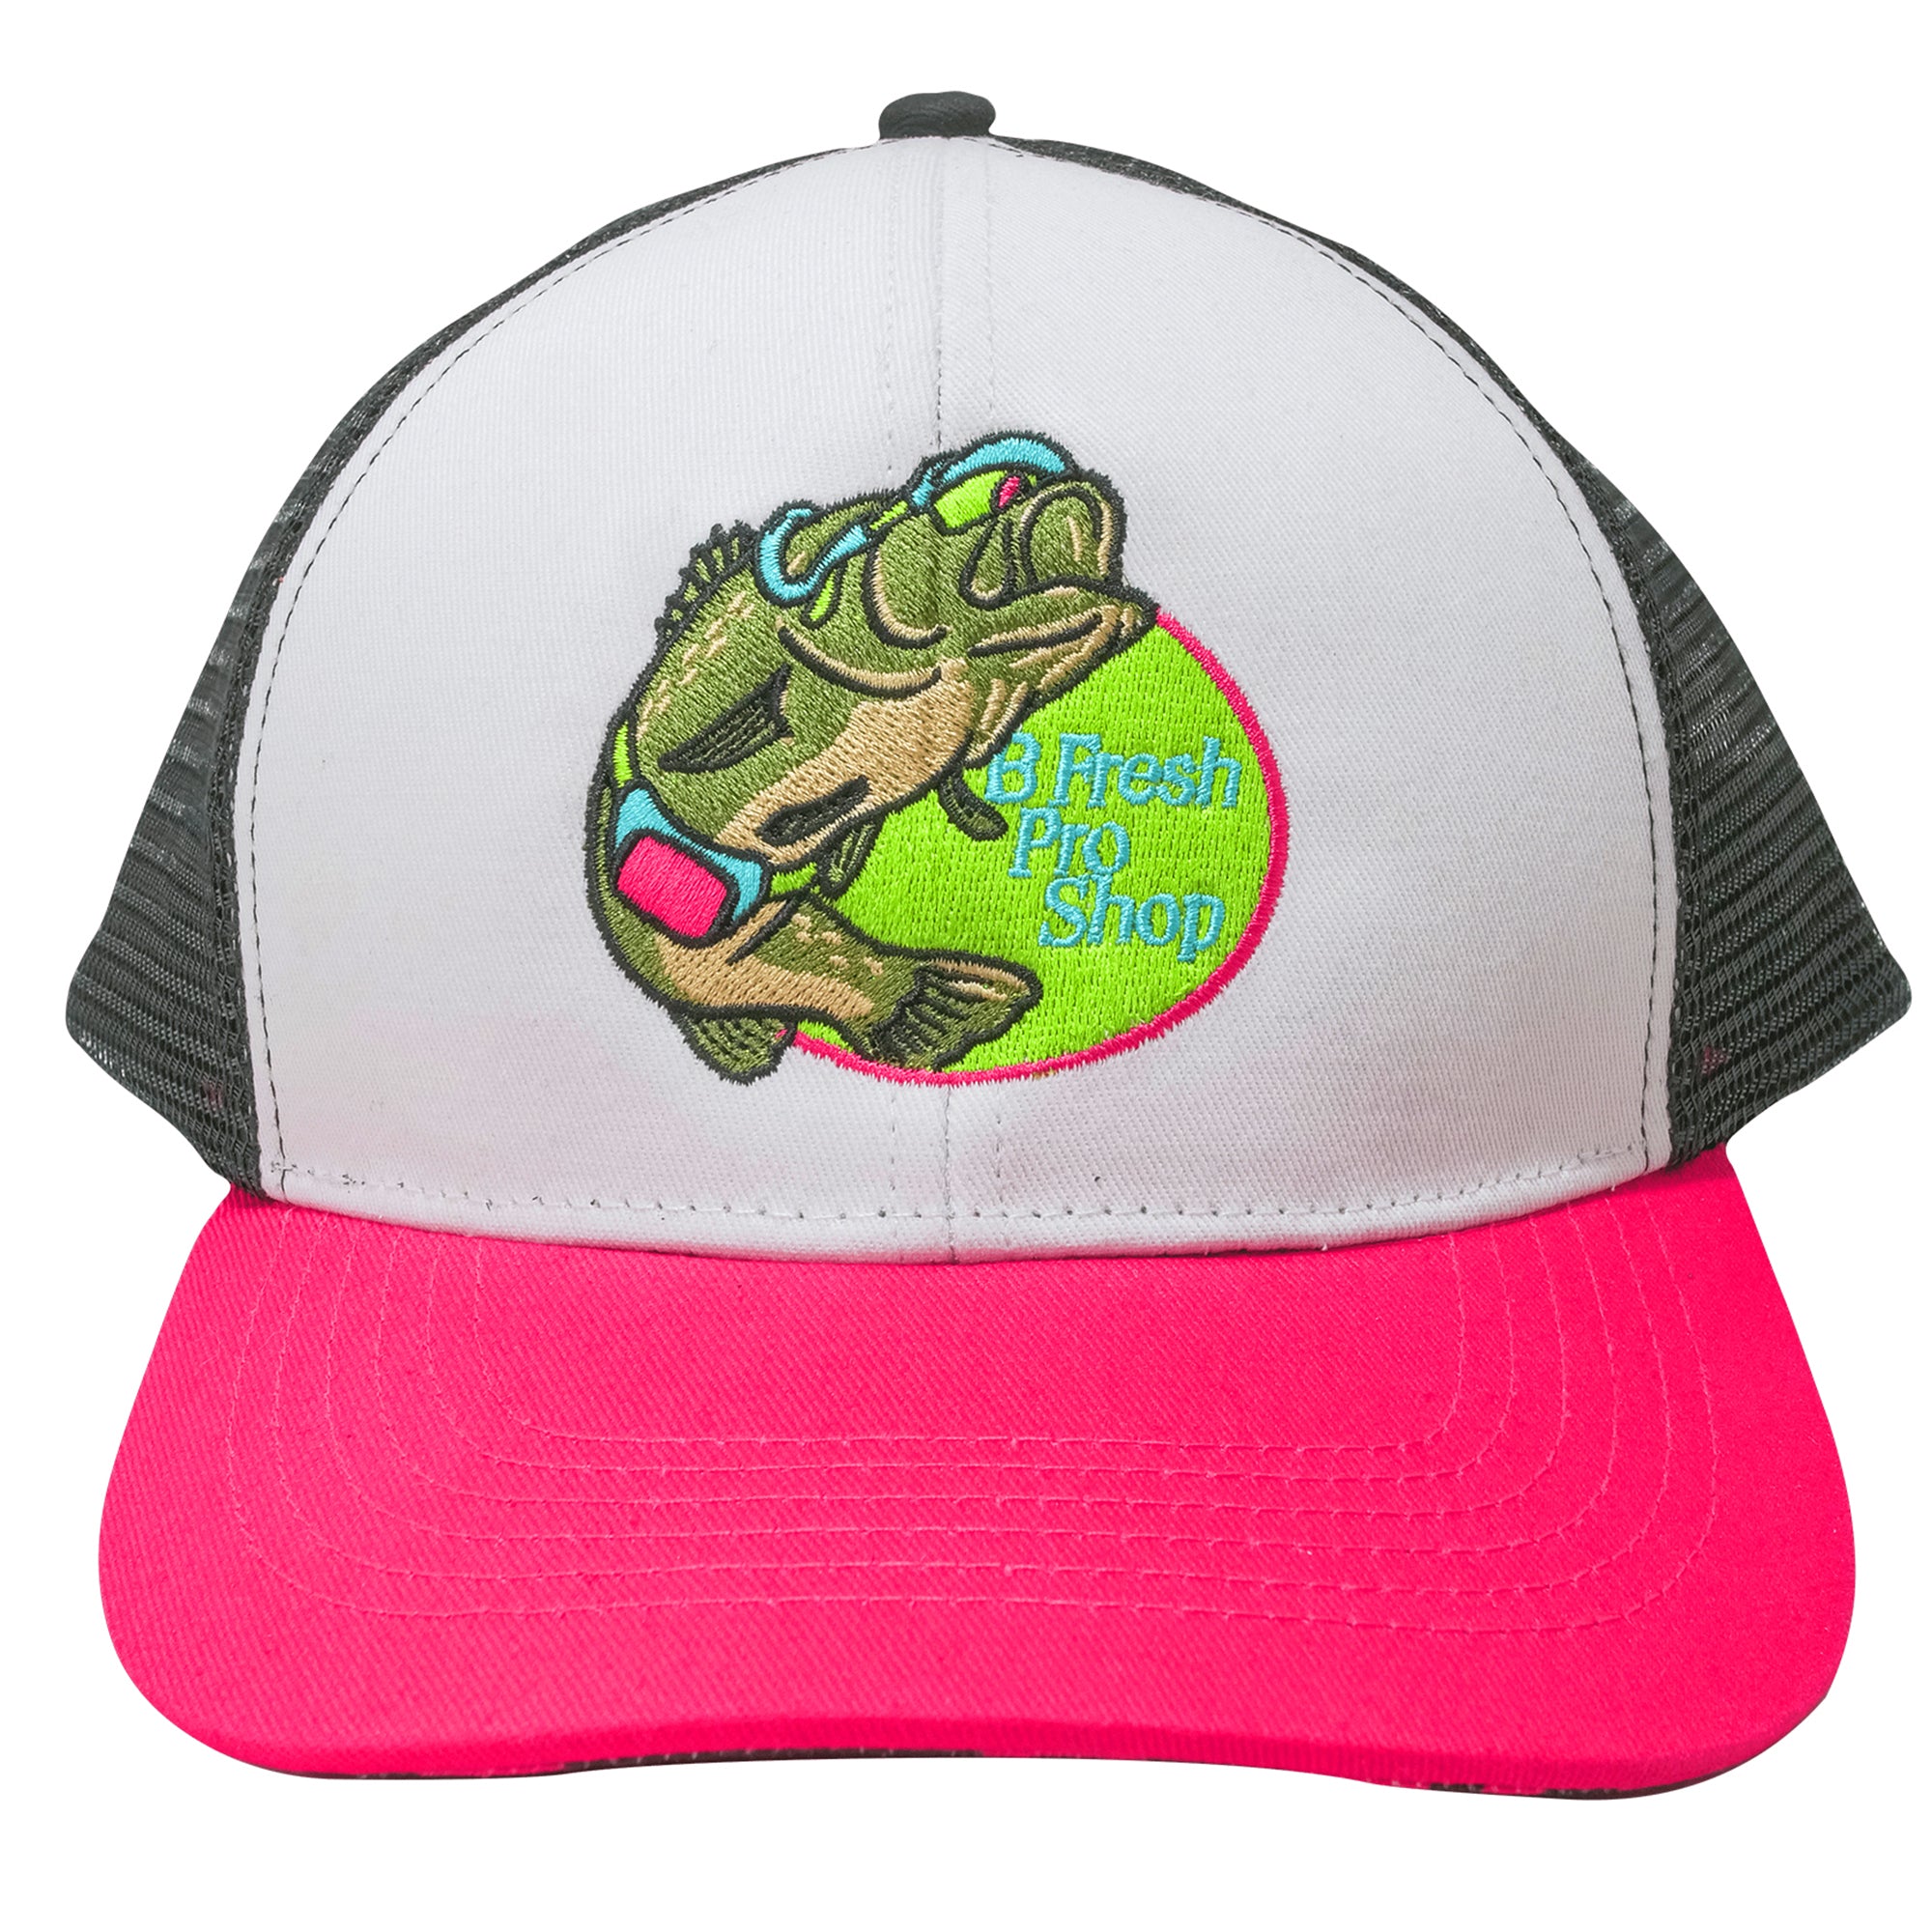 Fresh Pro Shop Pink Bill Mesh Trucker Style Hat Fishing Outdoors. B Fresh Gear.